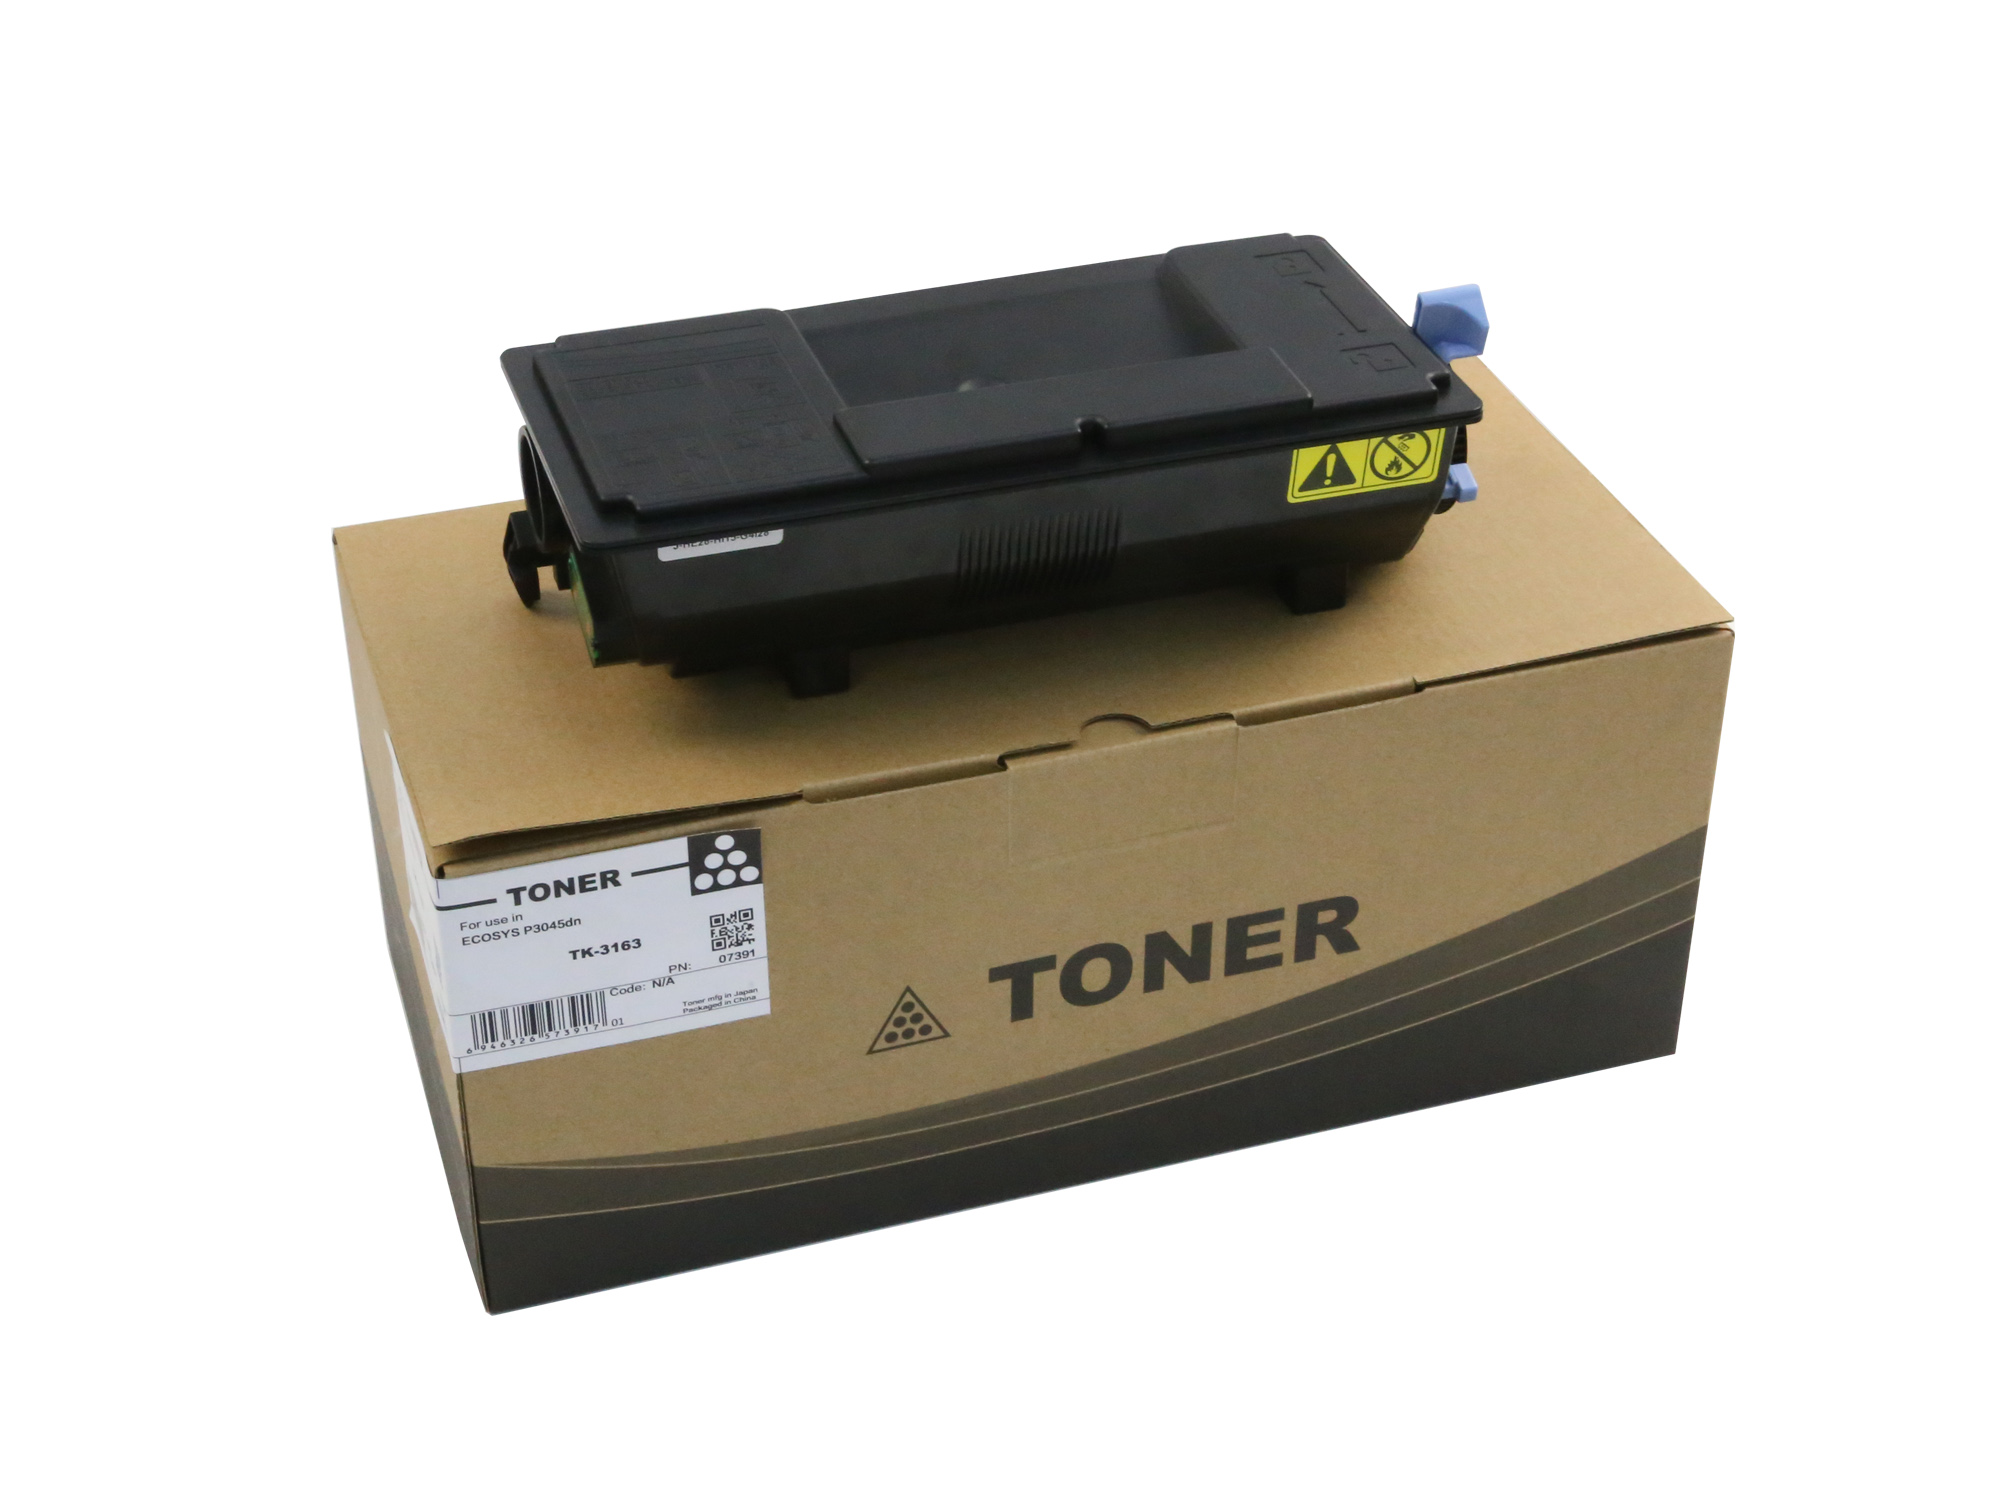 TK-3163 Toner Cartridge for Kyocera ECOSYS P3045dn